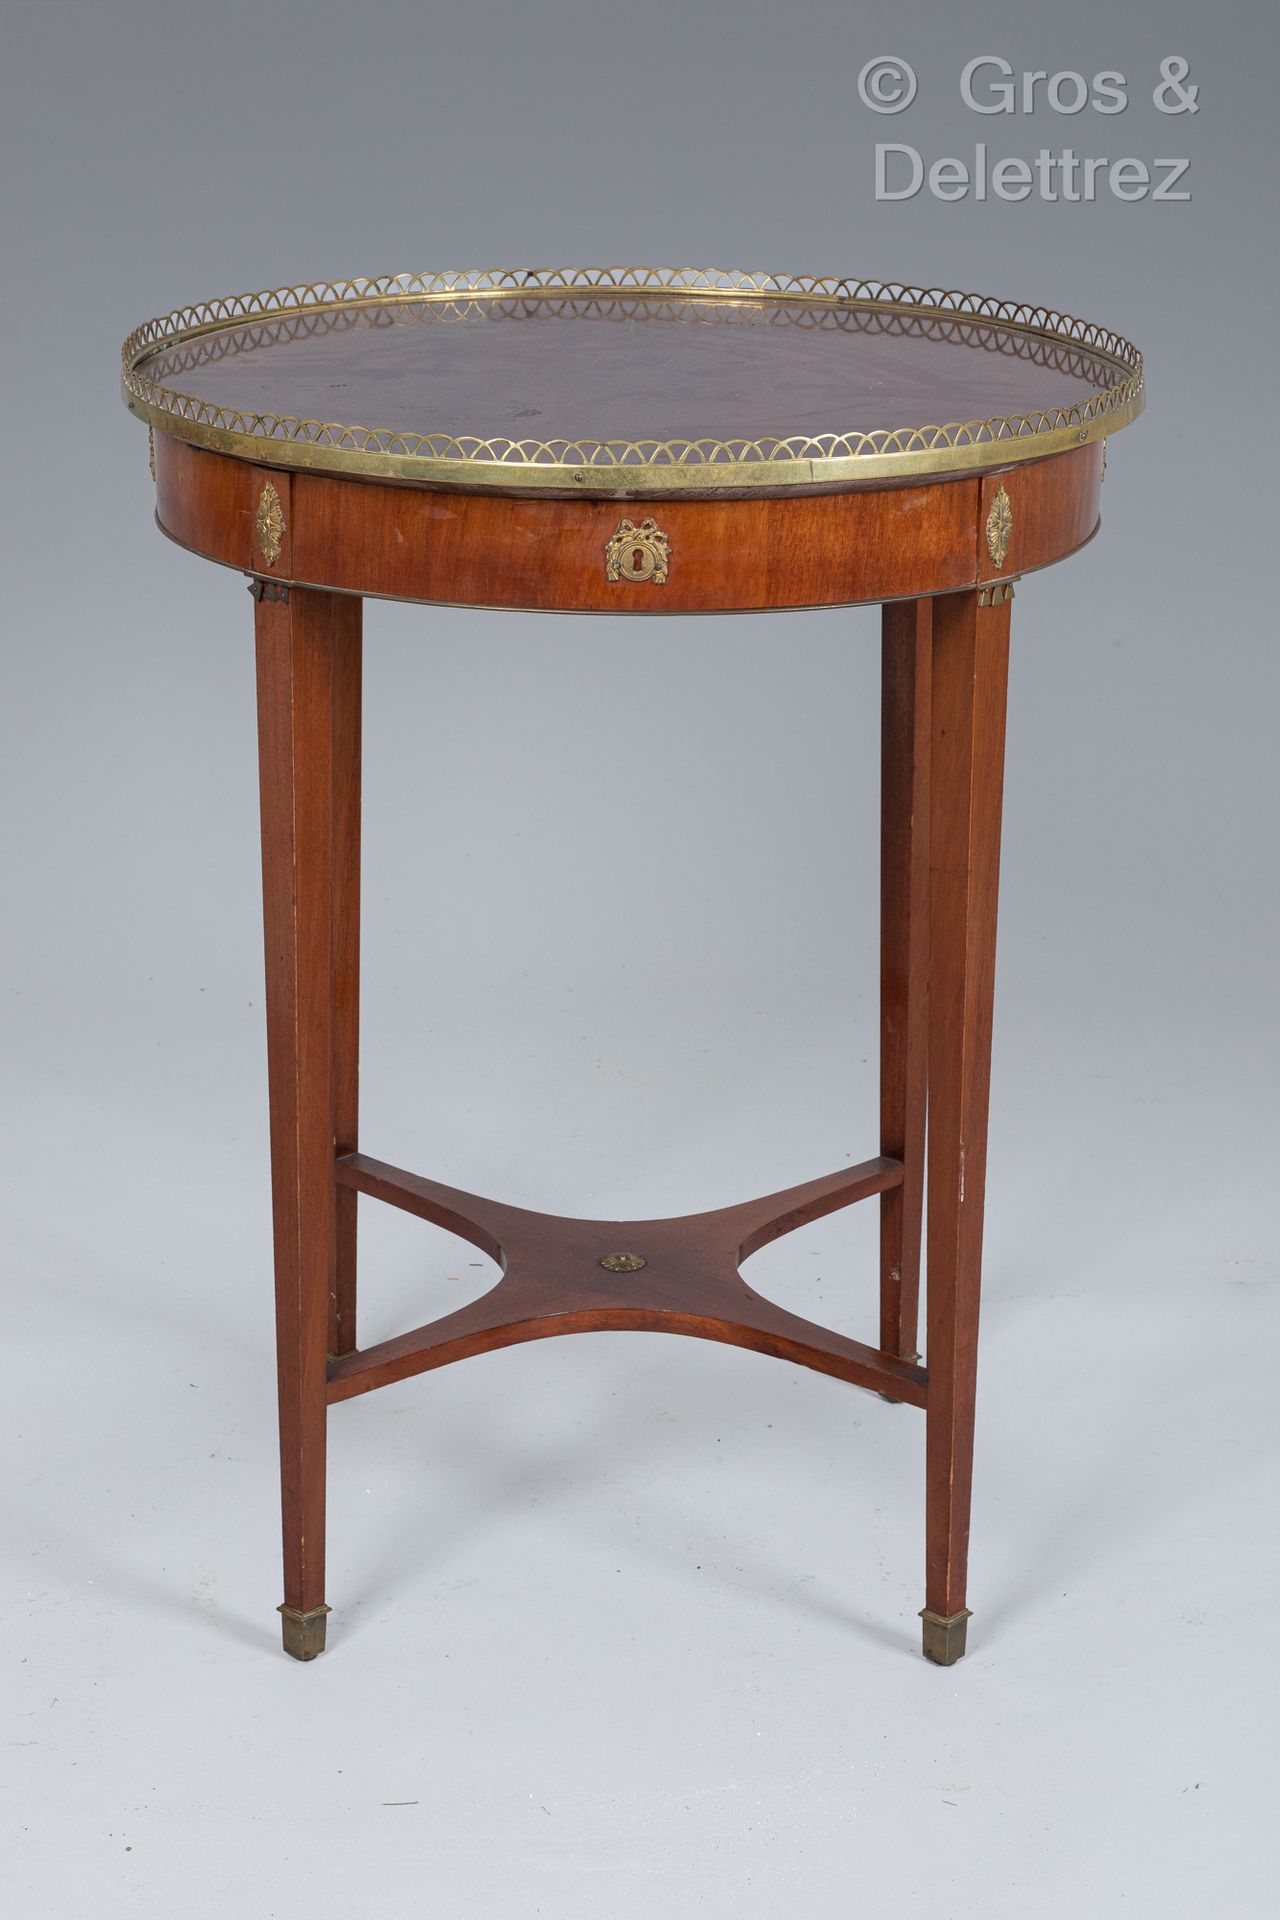 Null 异国情调的木皮圆形基座桌，腰部有一个抽屉。它站在四个由支架连接的鞘状腿上。
镂空的铜质画廊。
18世纪末的瑞典作品
75 x 59厘米